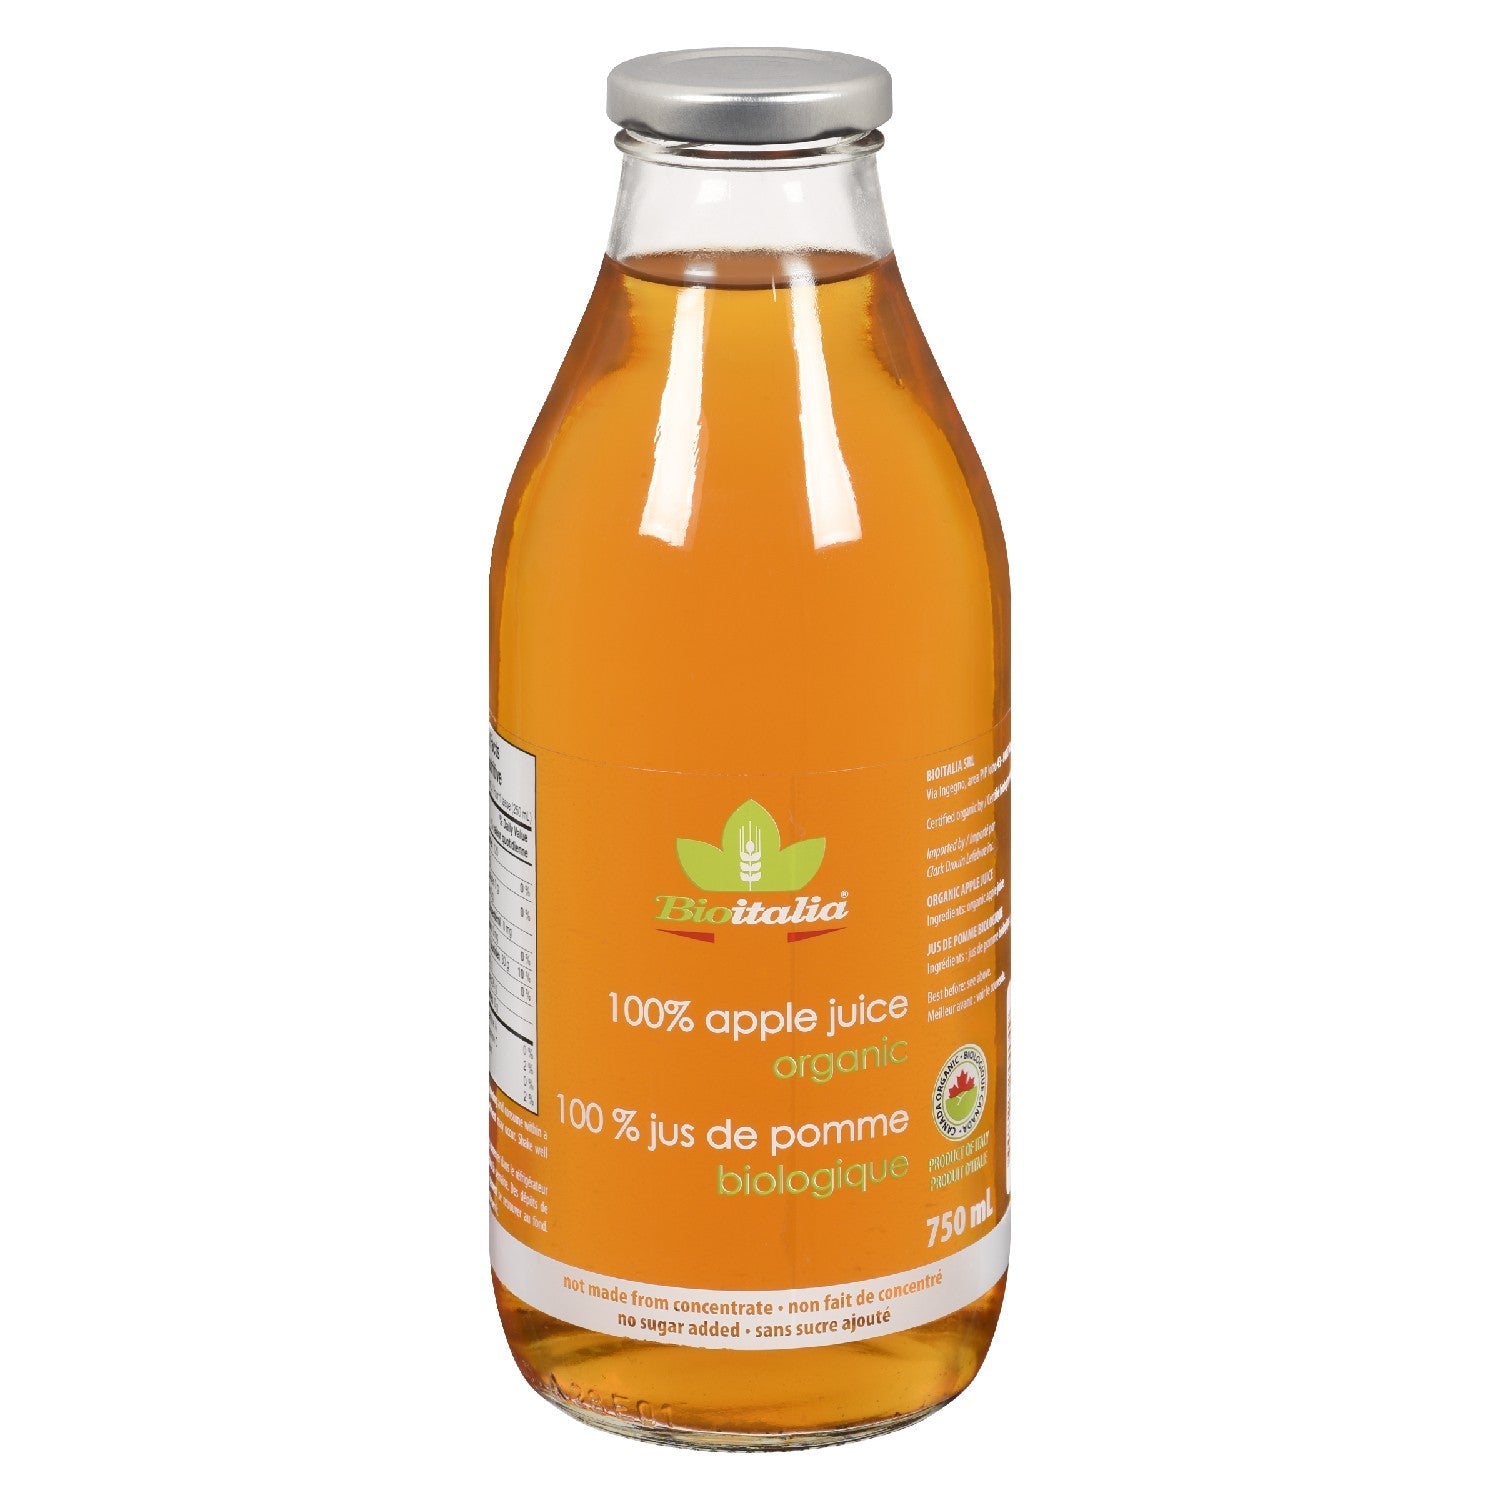 Organic apple juice 750ml